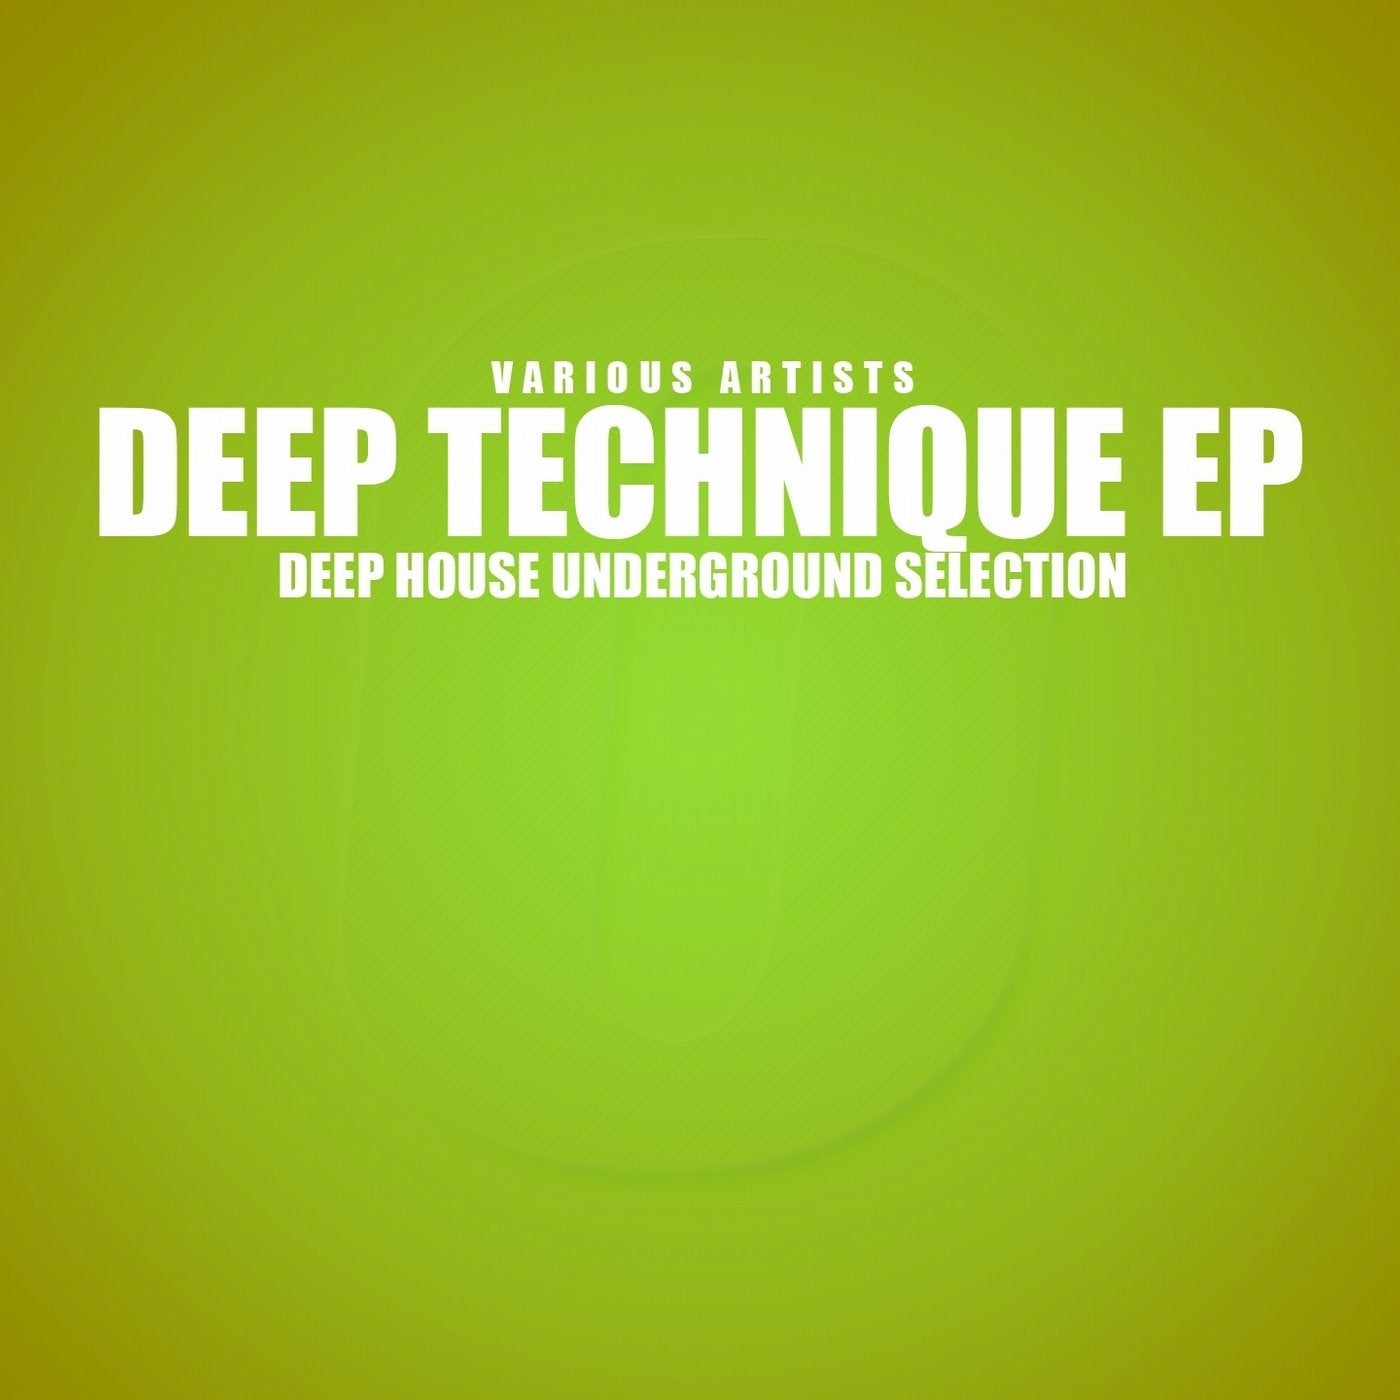 Deep Technique (Deep House Underground Selection)